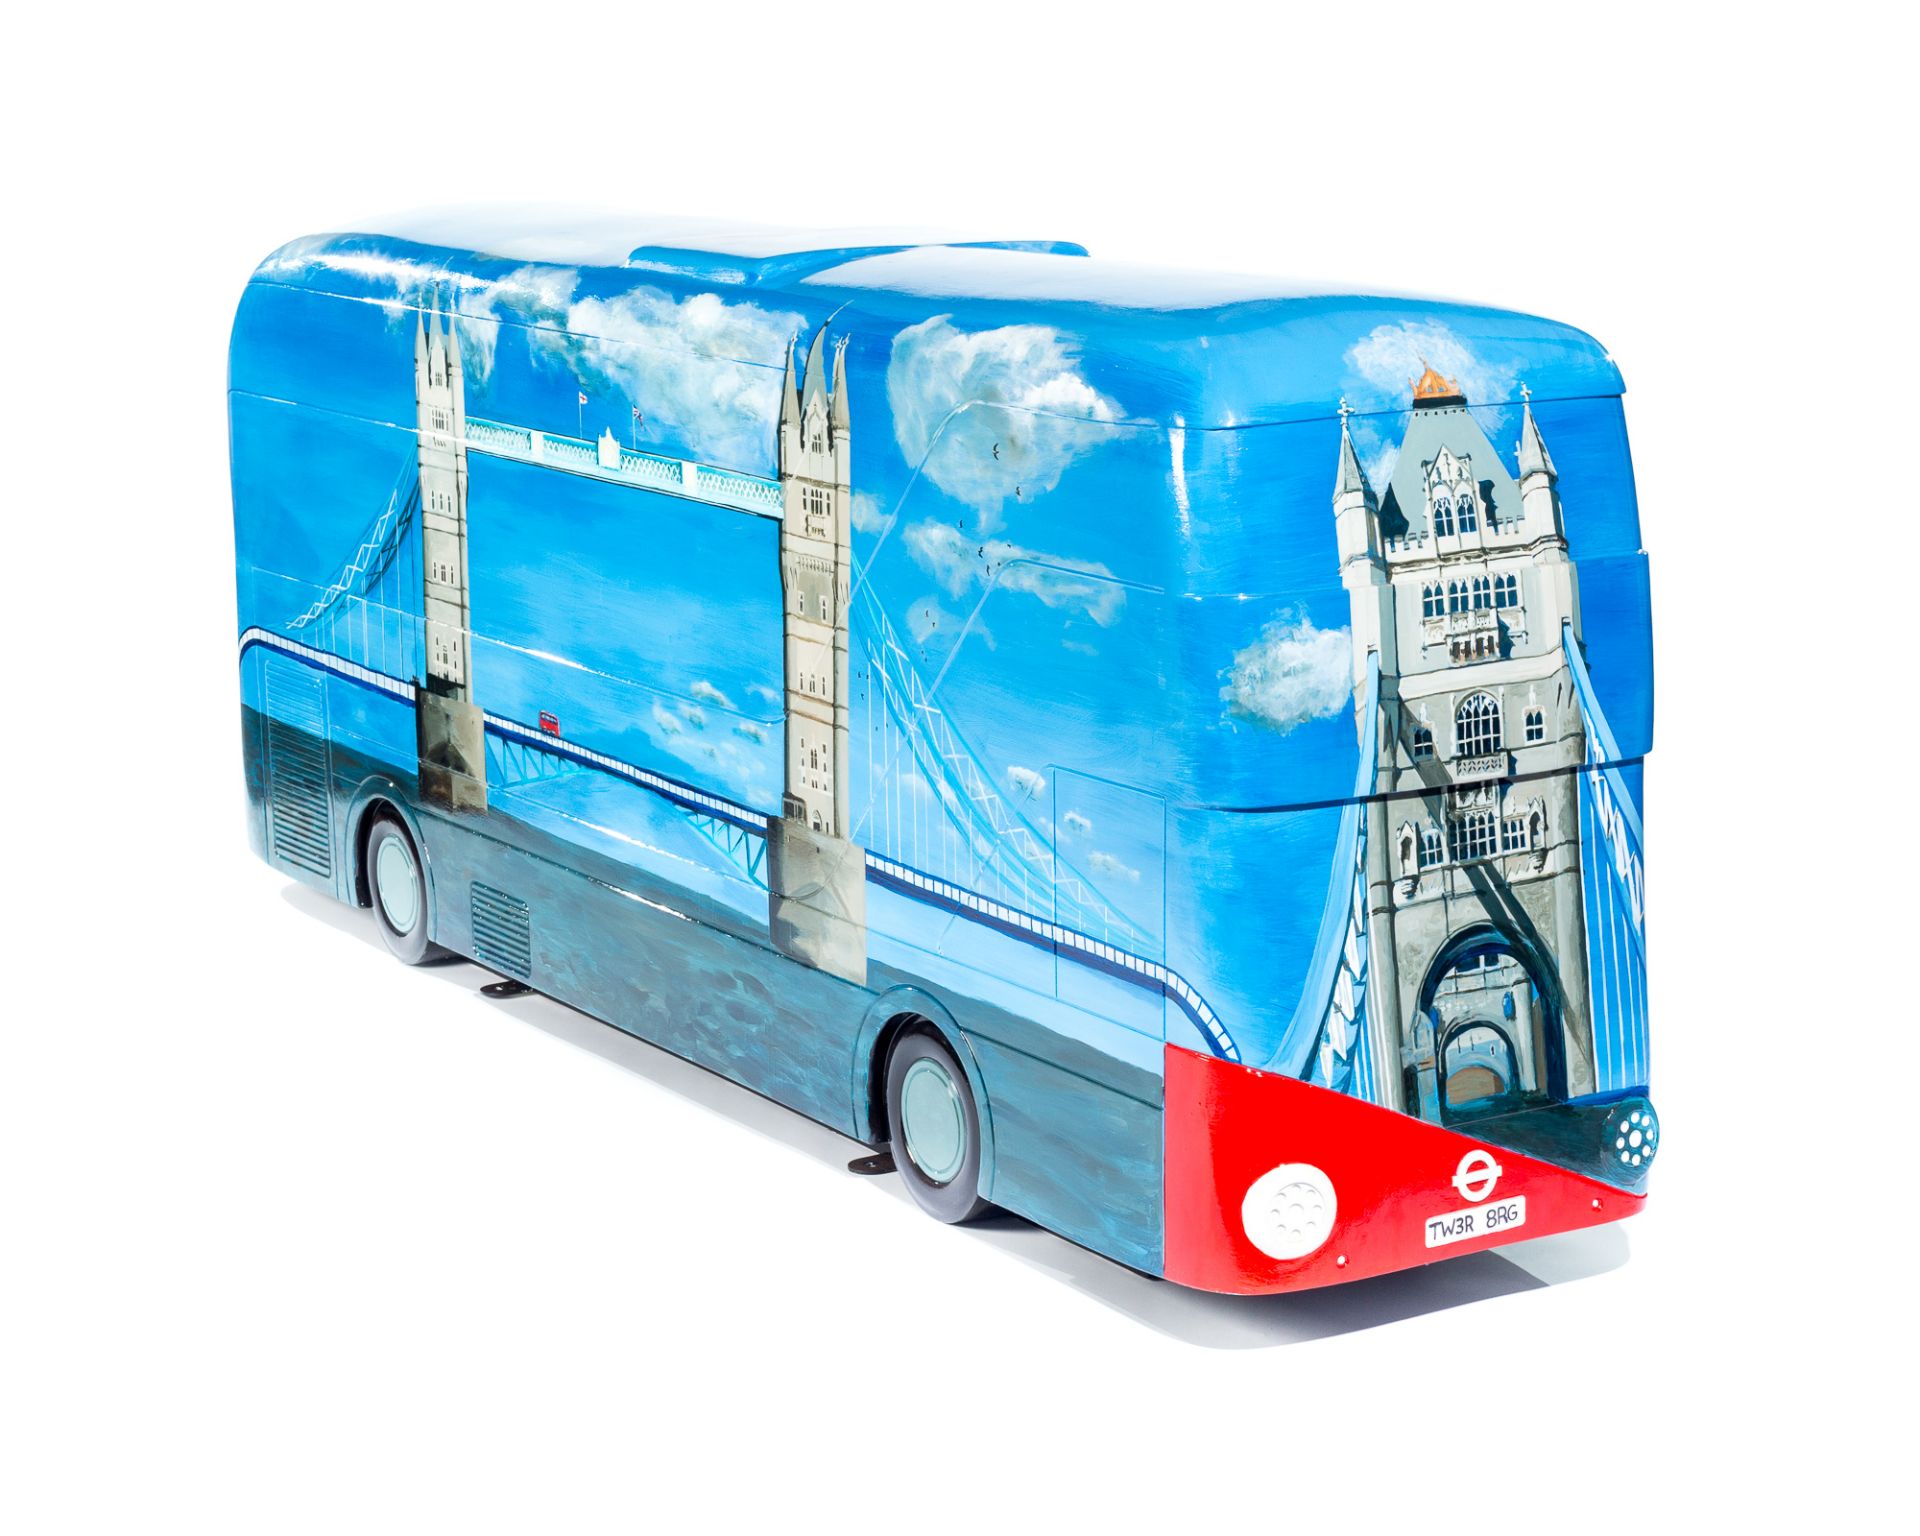 Artist: Michelle Heron  Design: Tower Bridge Bus    About the artist   Michelle was born and